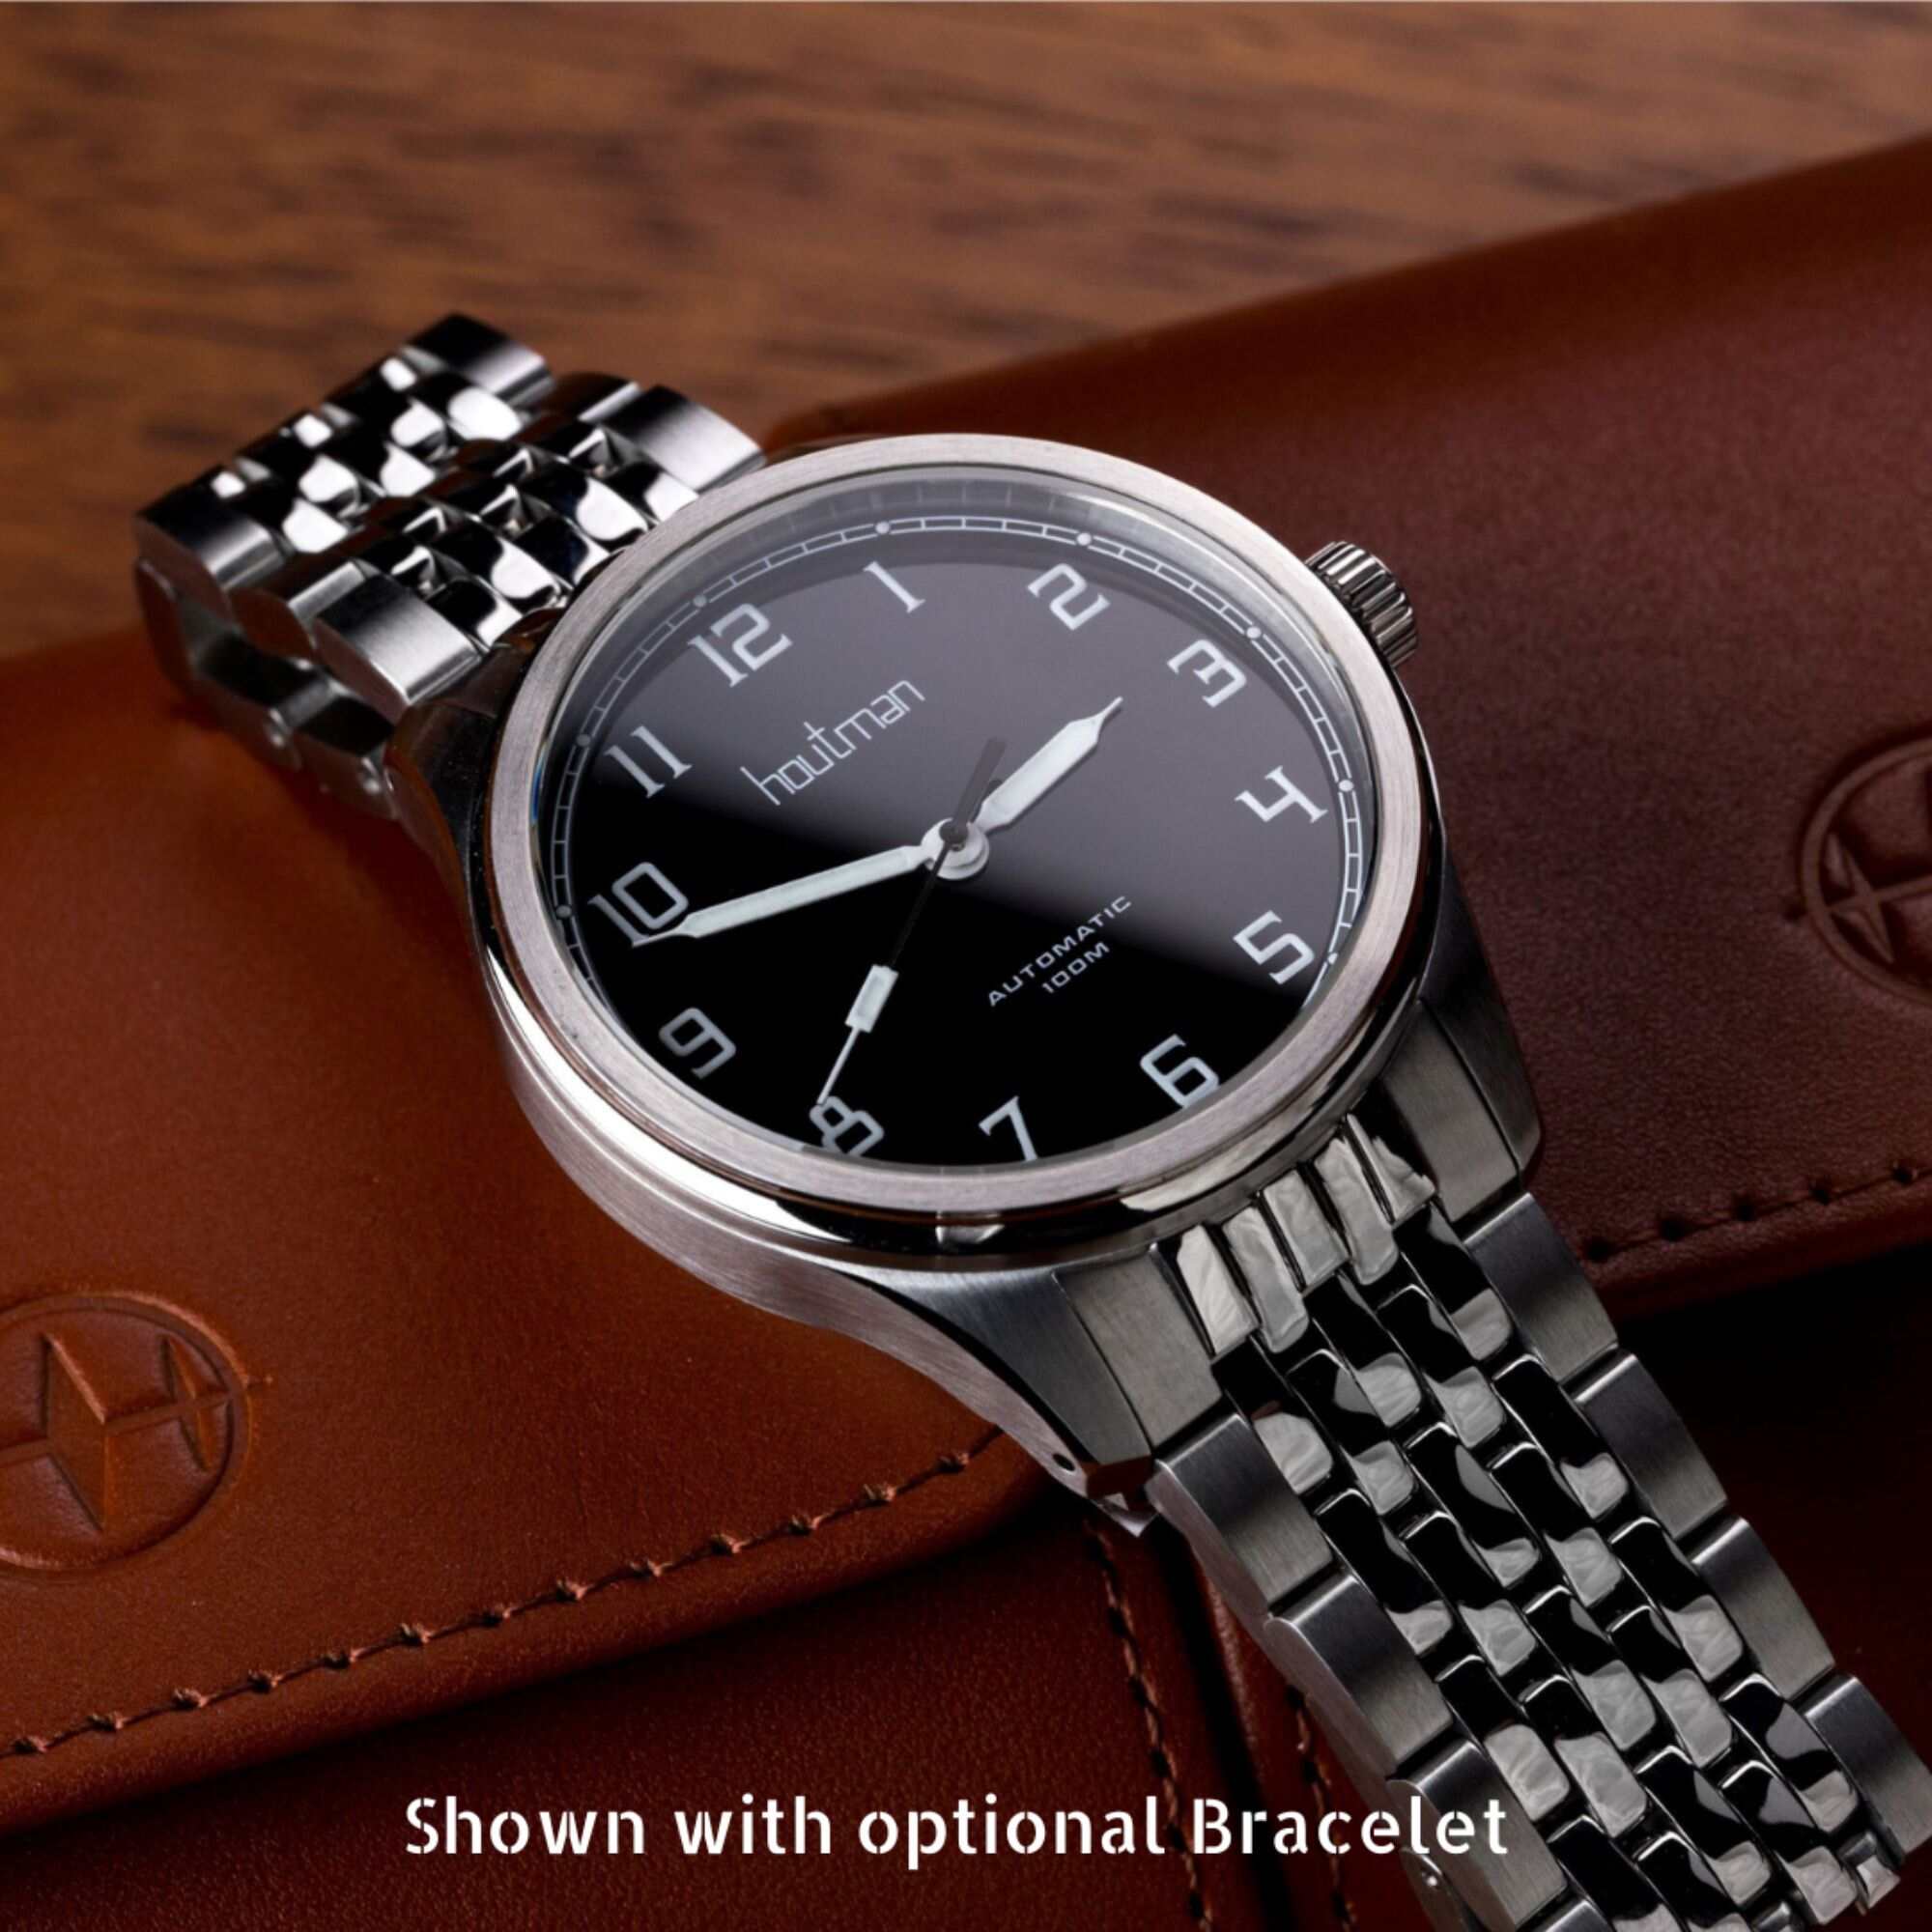 Pilot style watch from Australian watch brand Houtman Watches